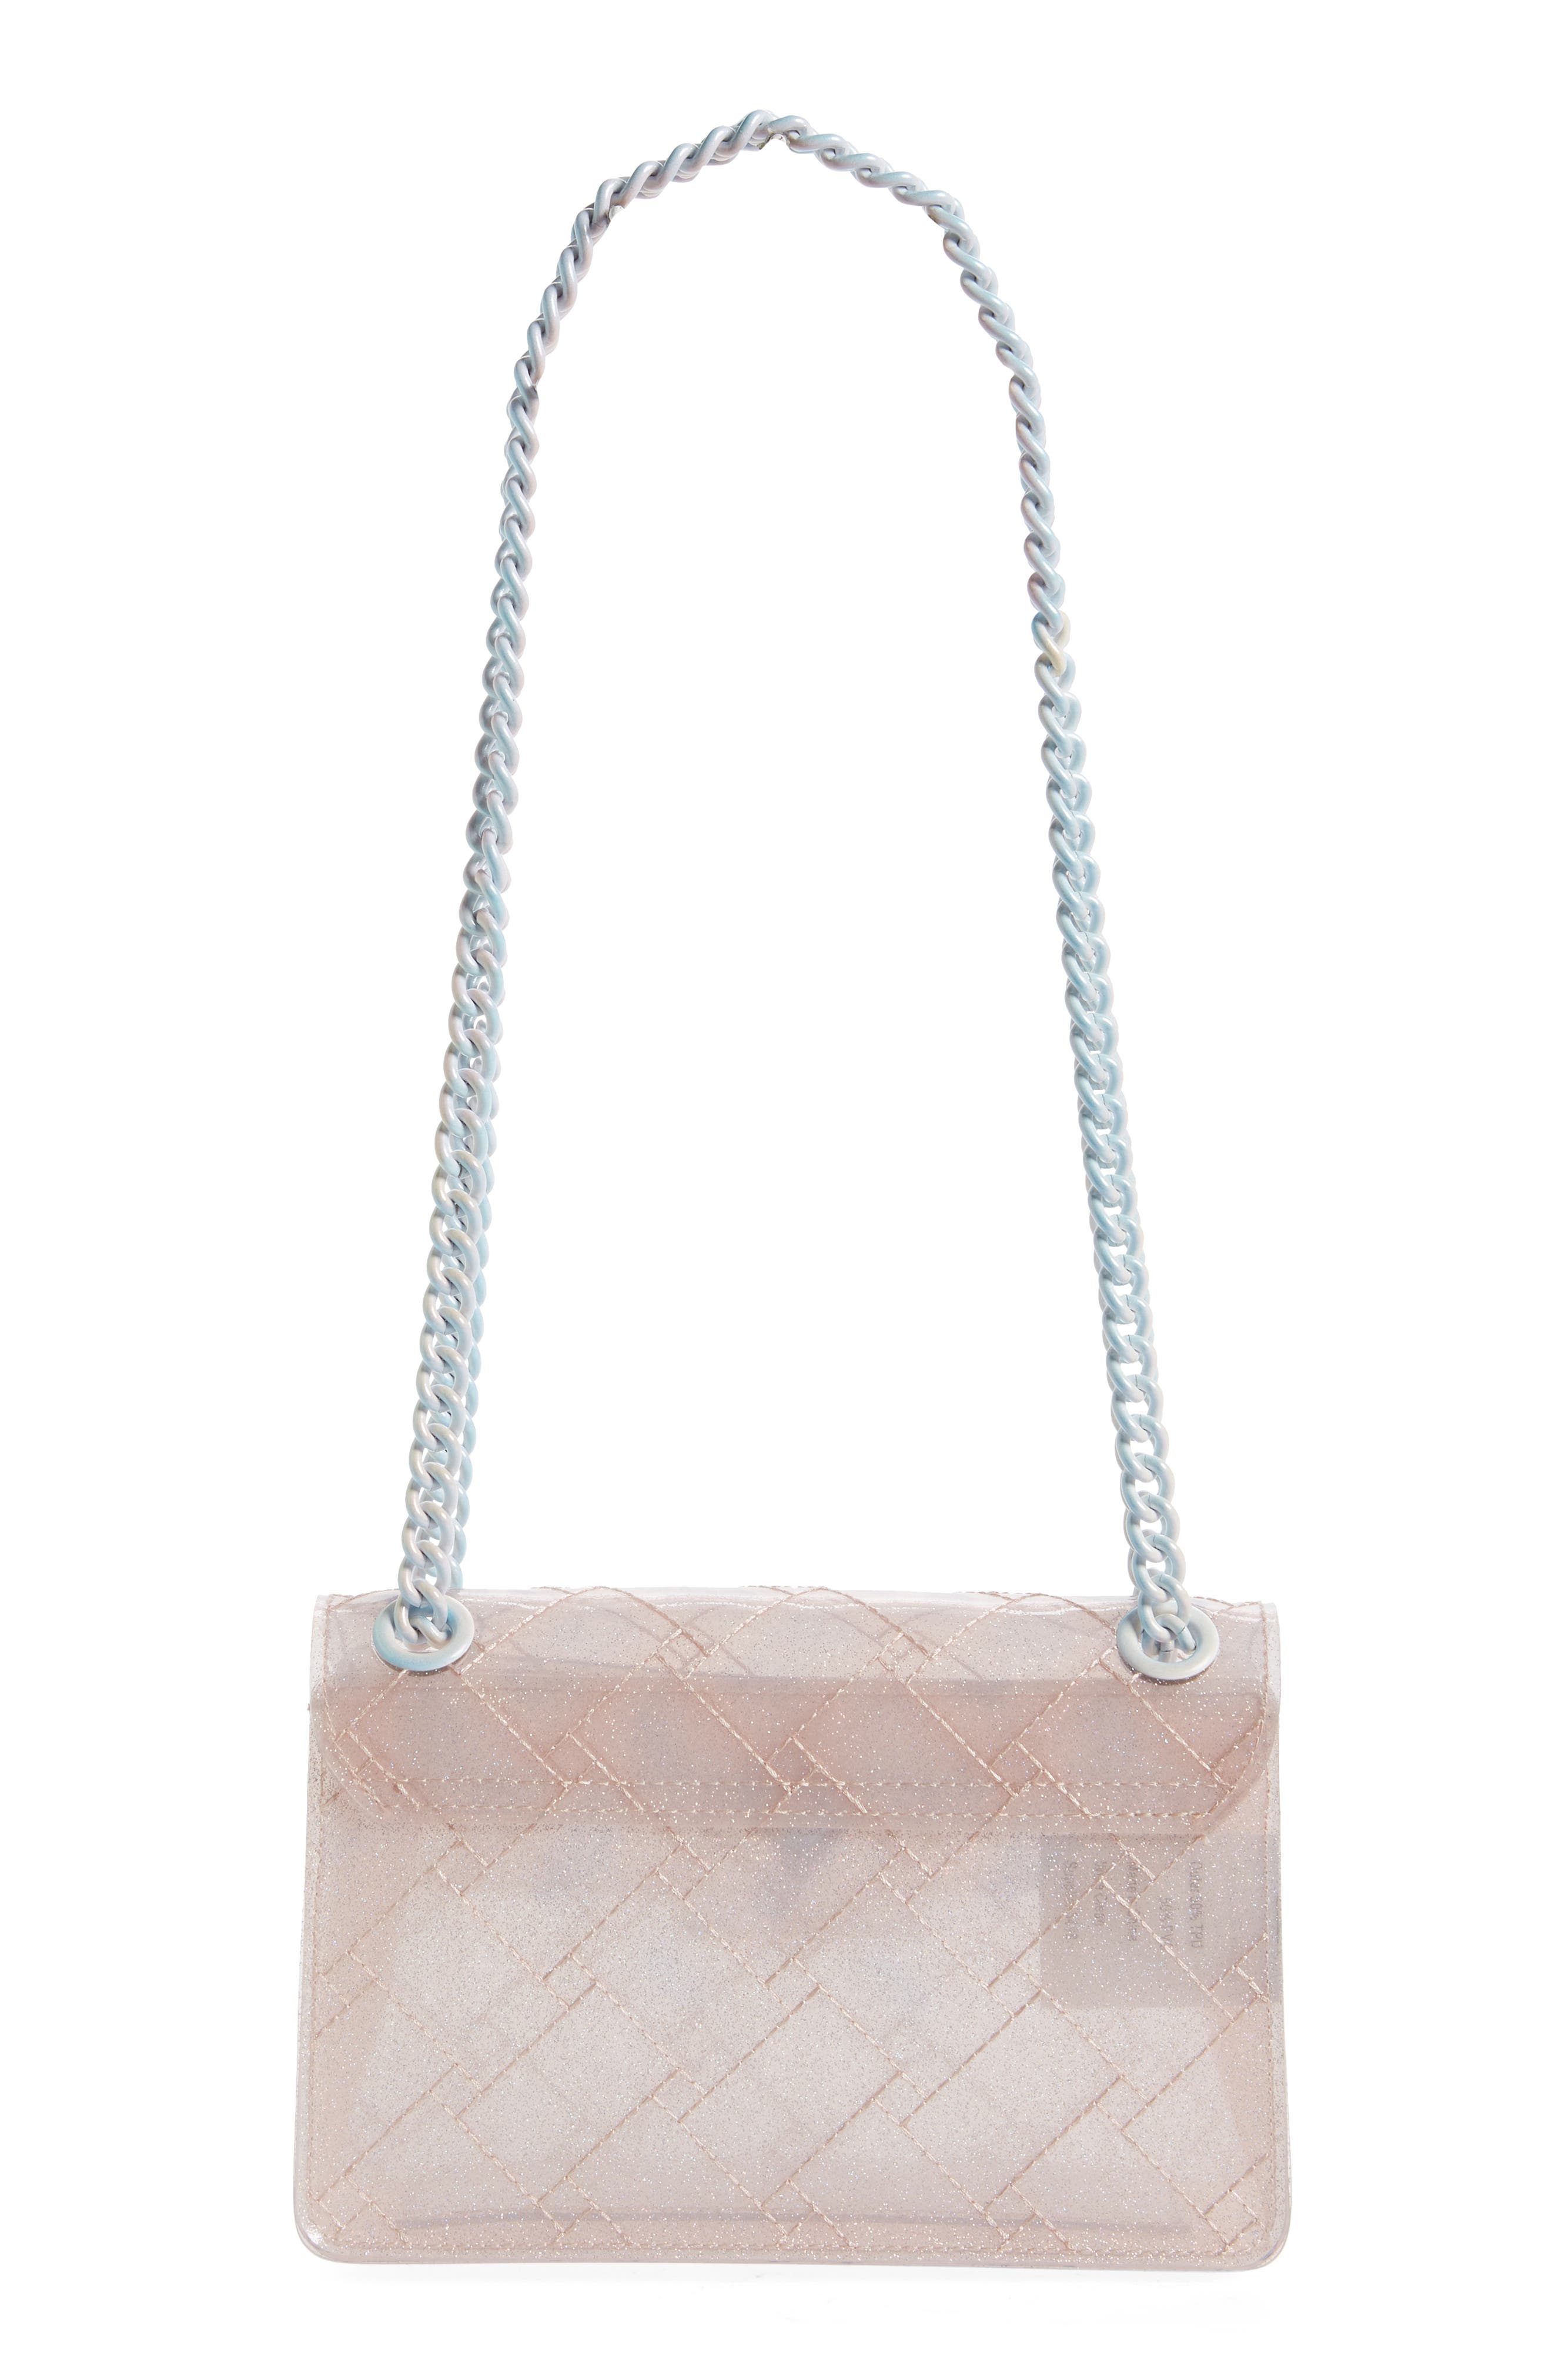 Kurt Geiger London Mini Kensington Glitter Convertible Shoulder Bag in Pale  Pink